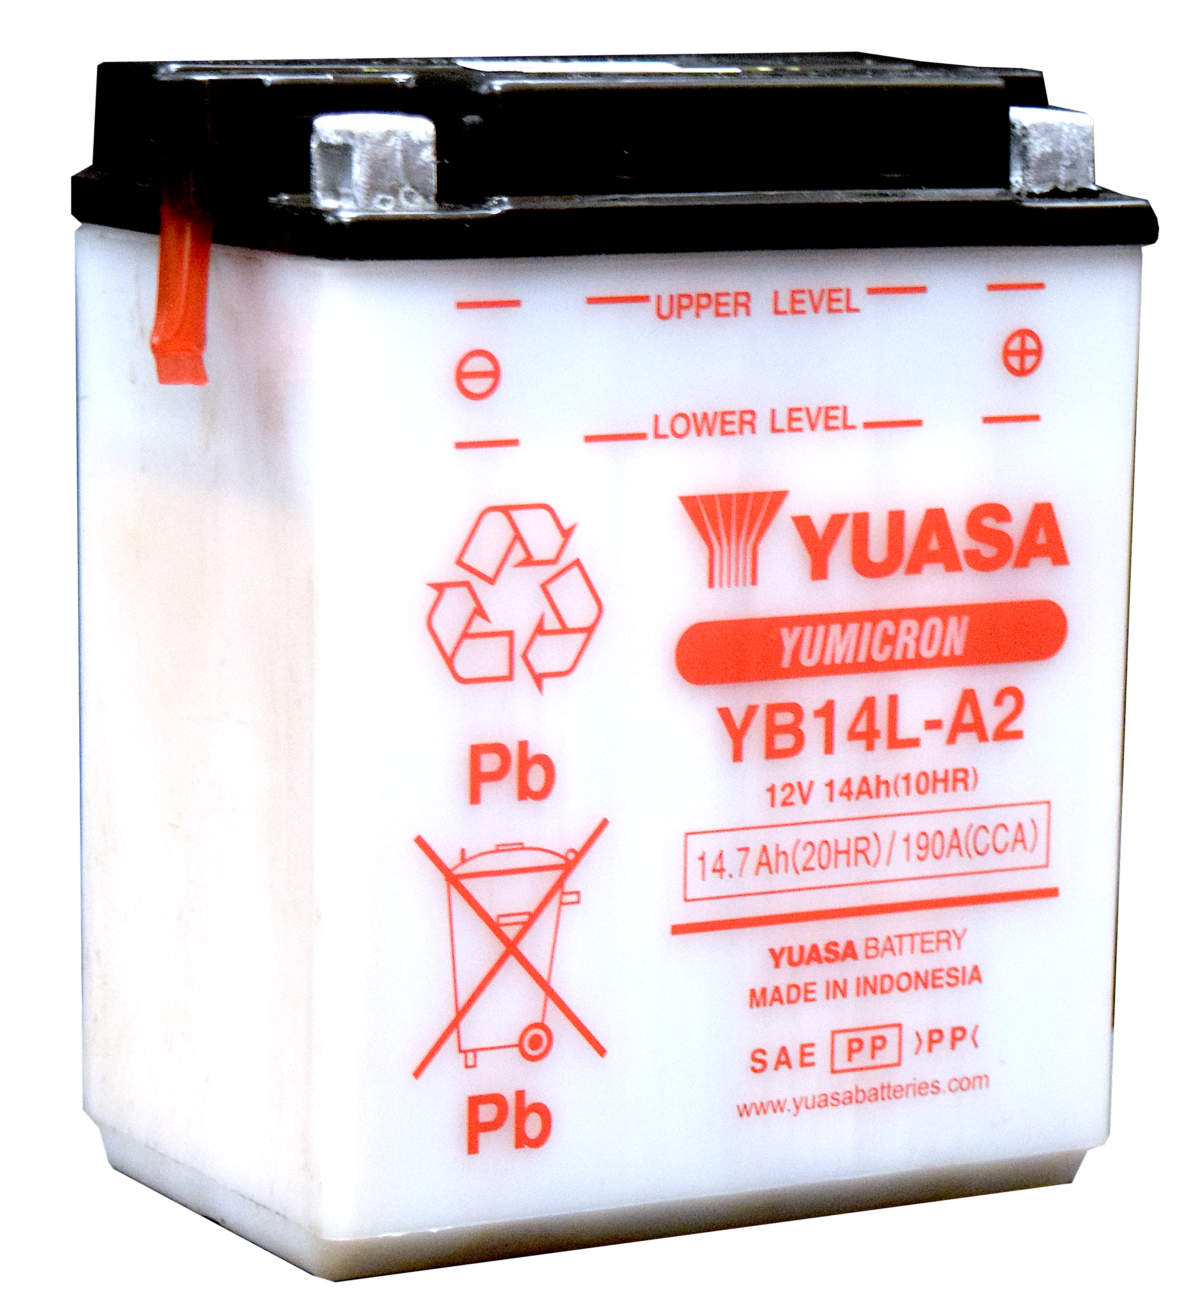 Yuasa YB14L-A2 Yumicron Battery for motorsports, powersports, and motorcycle